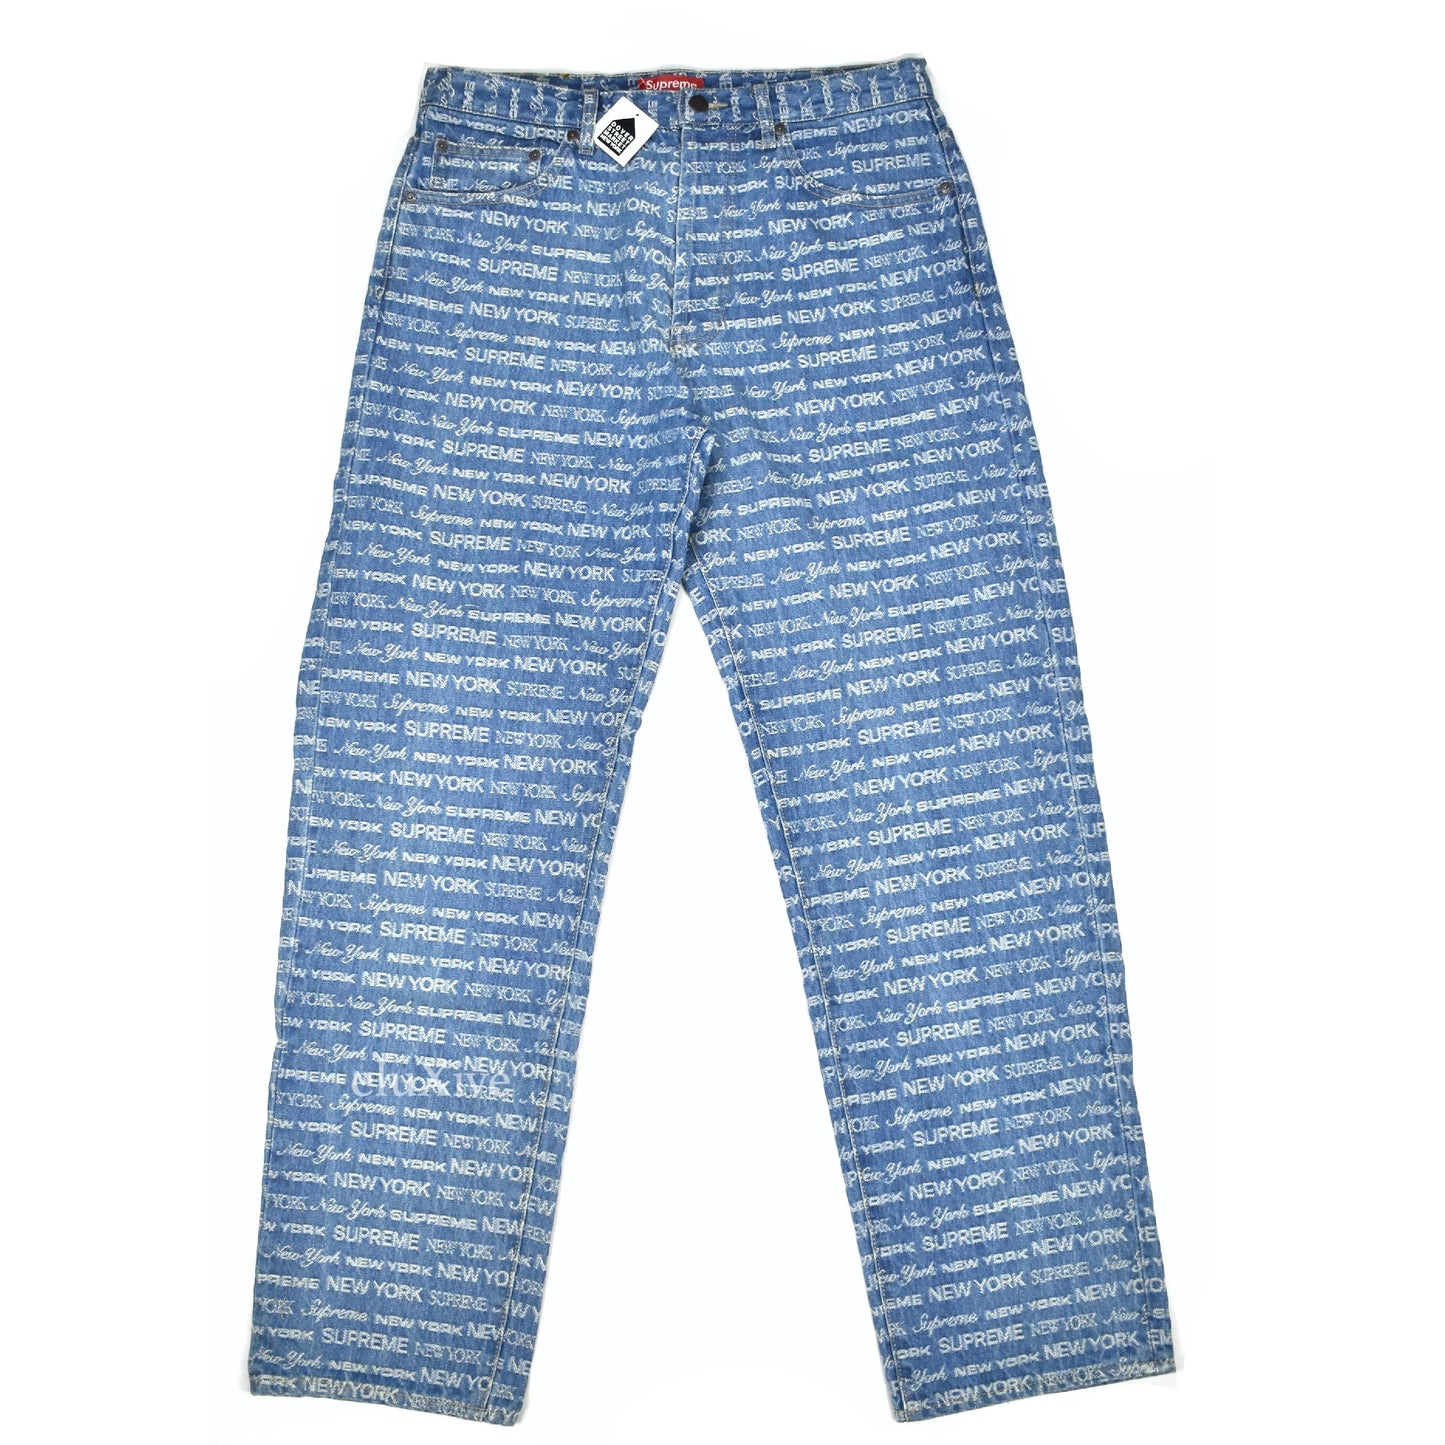 Supreme - Multi Type Jacquard Logo Denim Jeans (Blue)